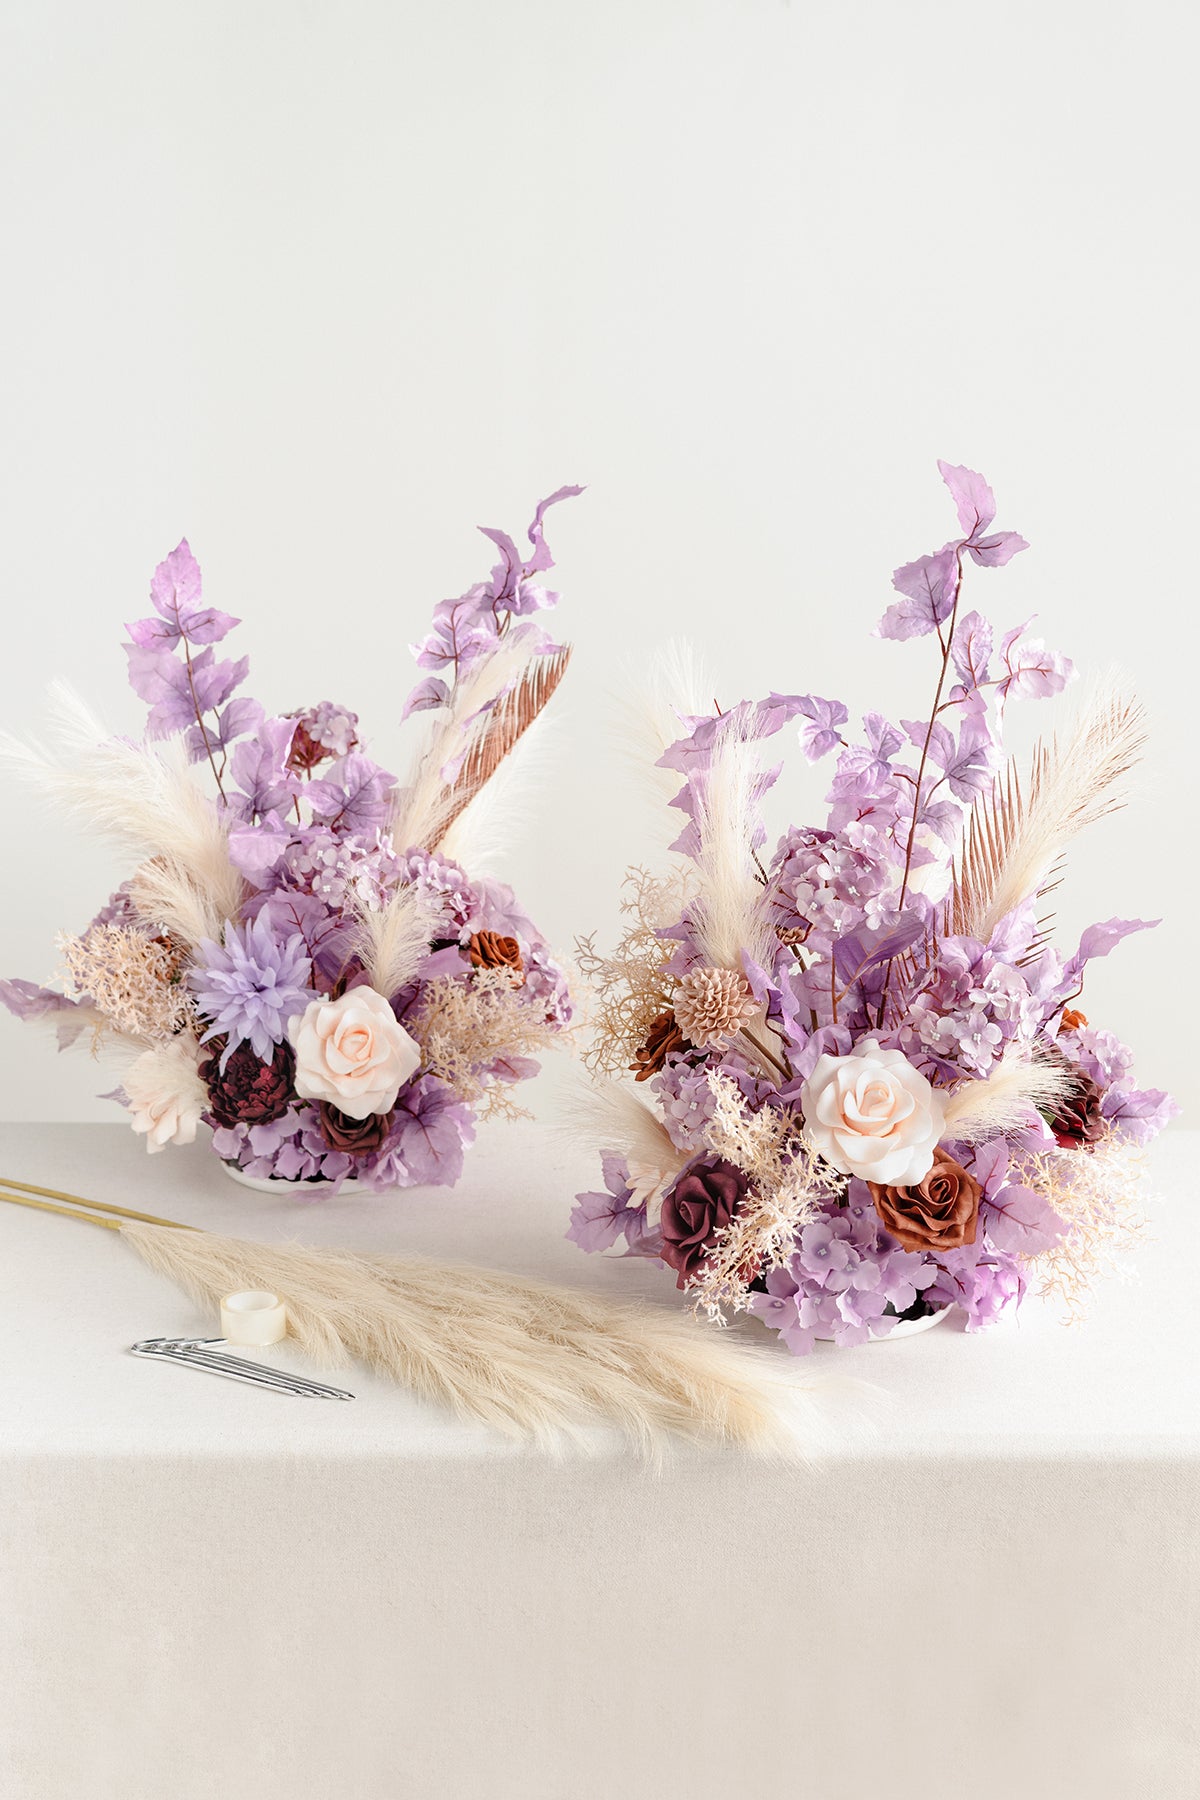 Oversized Free-Standing Ground Flower Arrangements in Lavender Aster & Burnt Orange